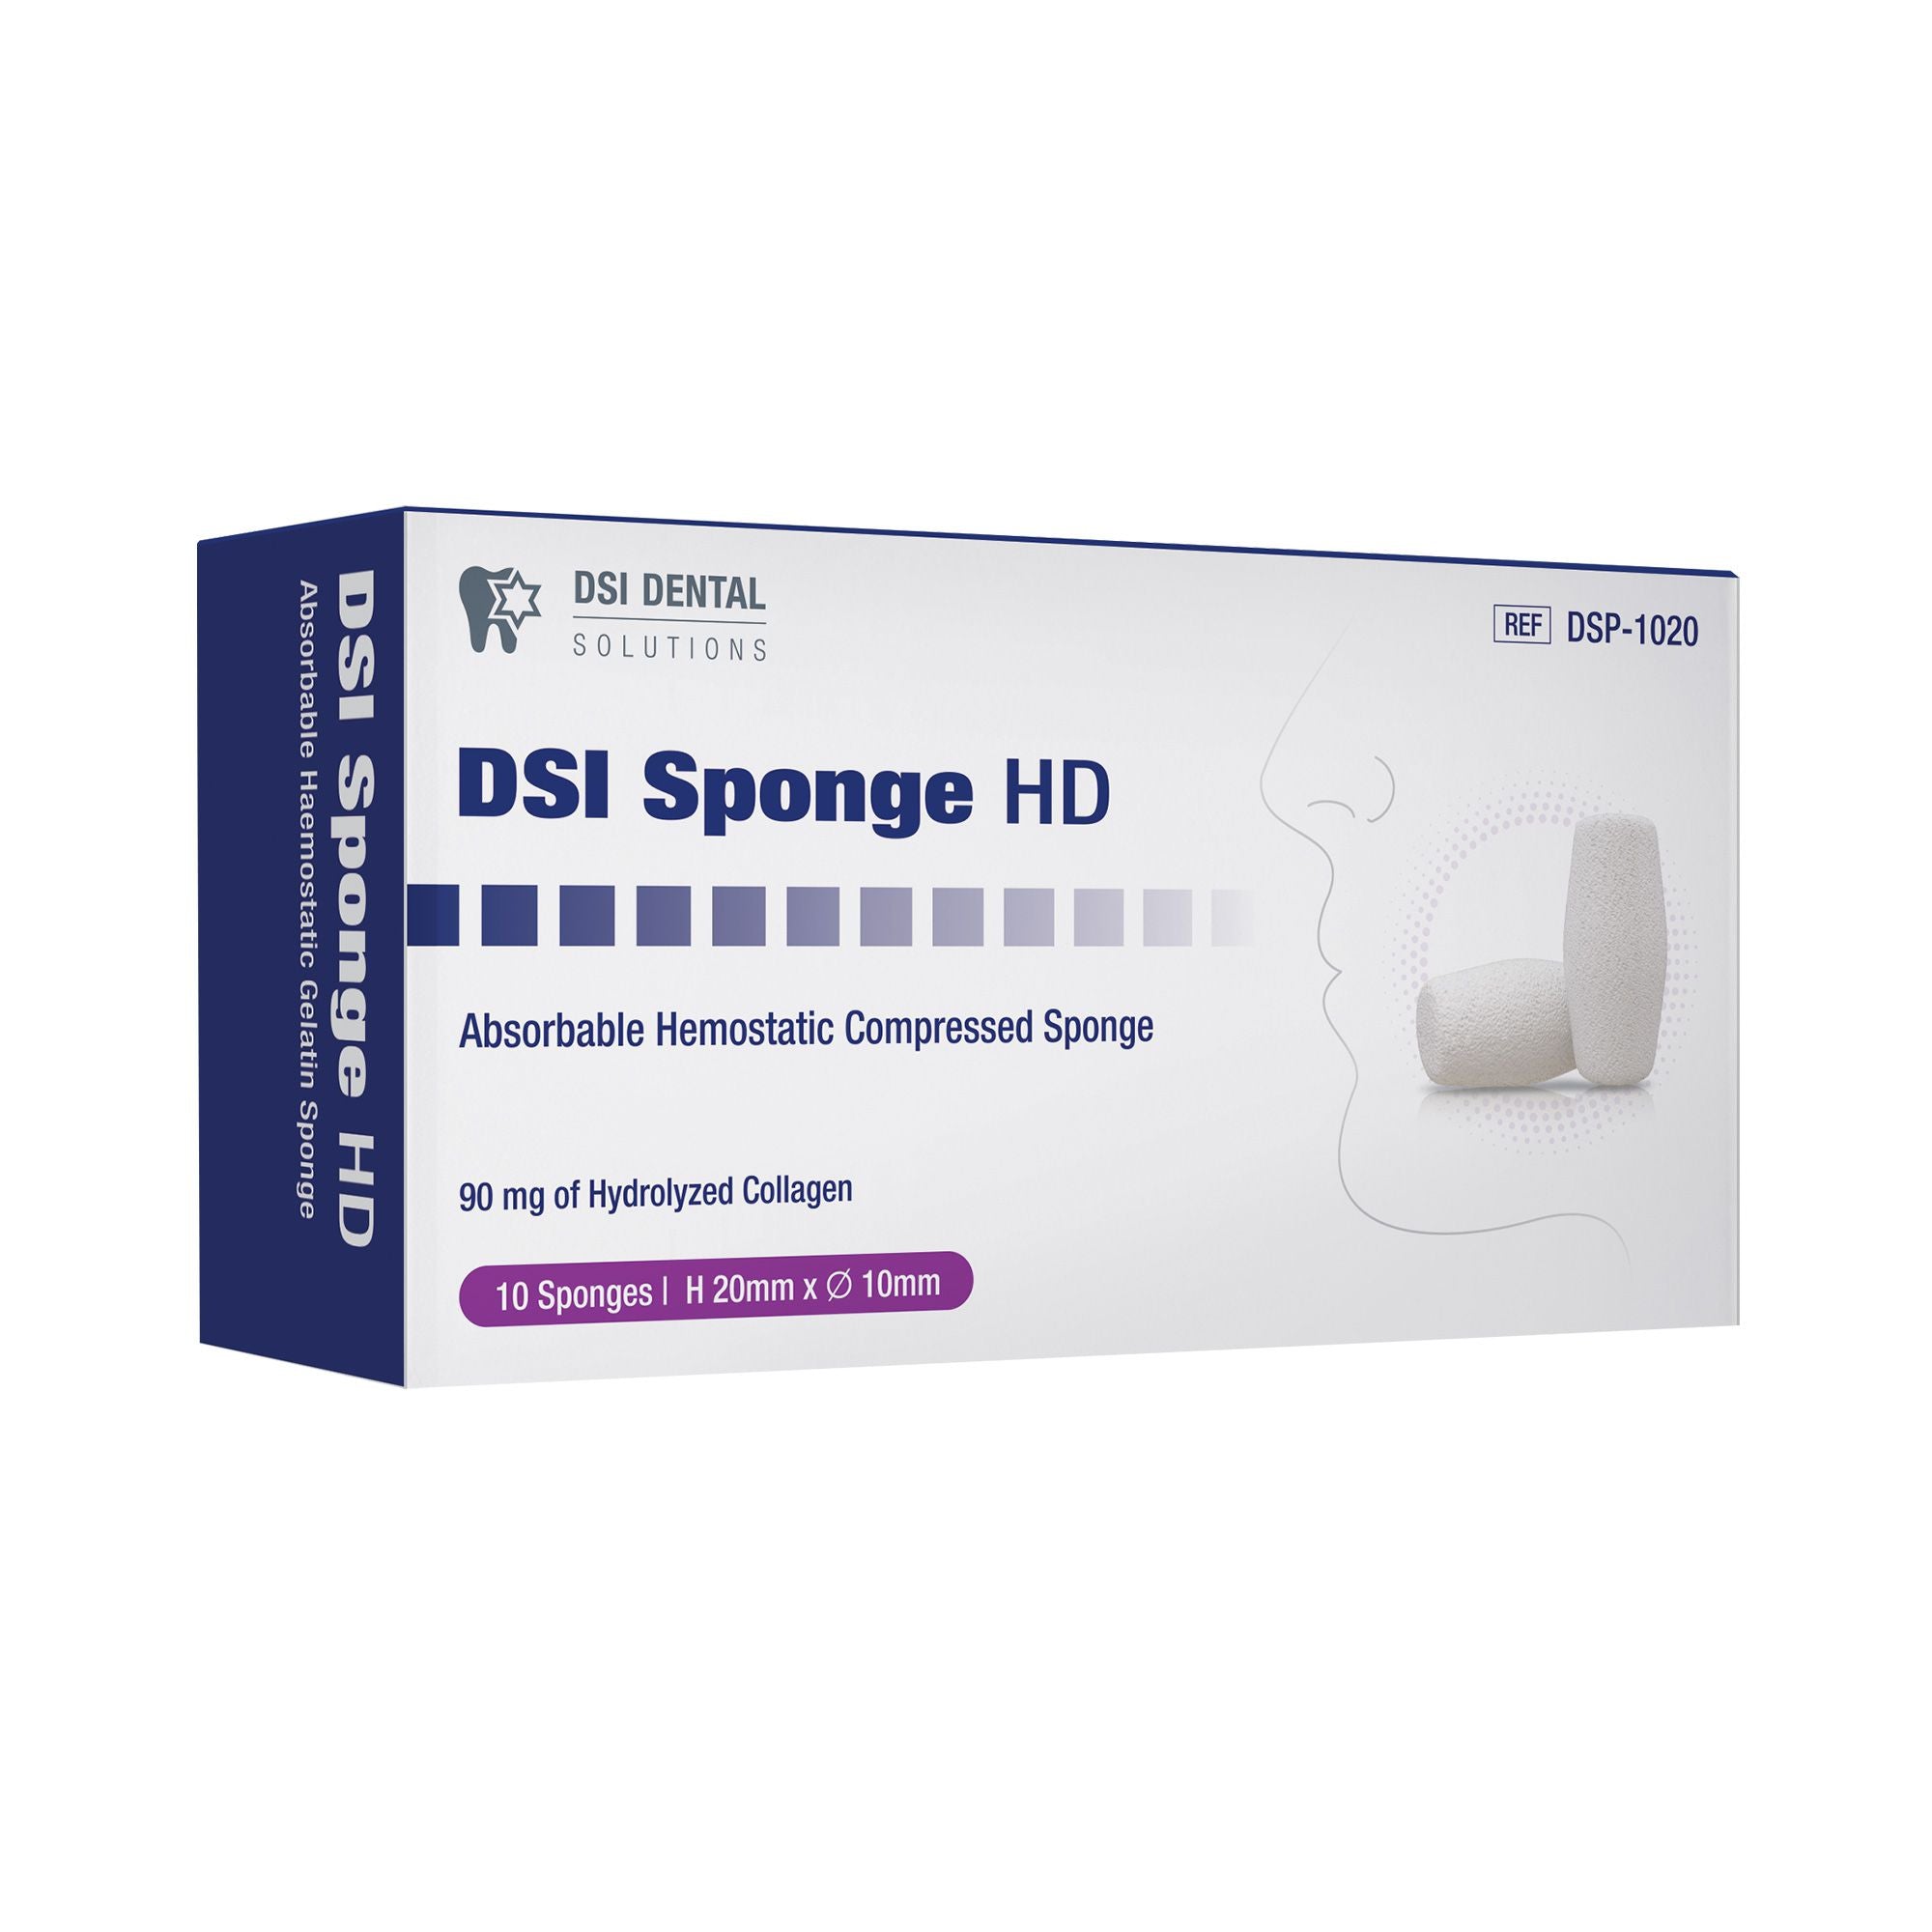 DSI Sponge HD Hemostatic Sterile Plugs 20x10mm